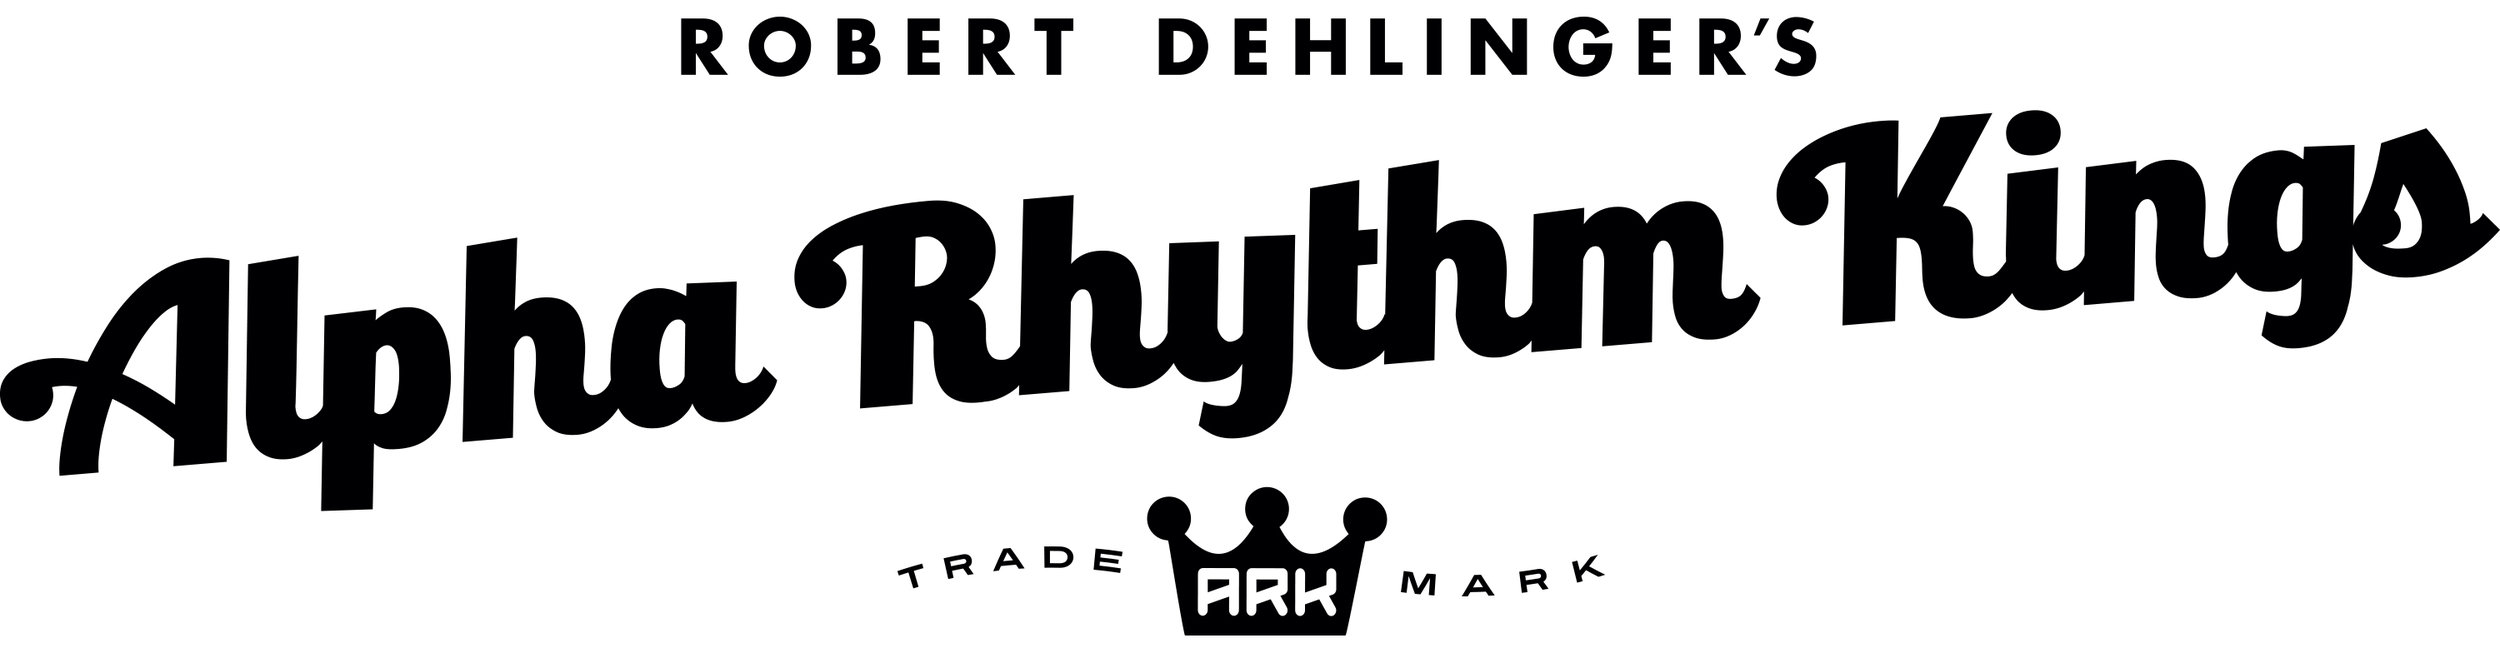 Alpha Rhythm Kings